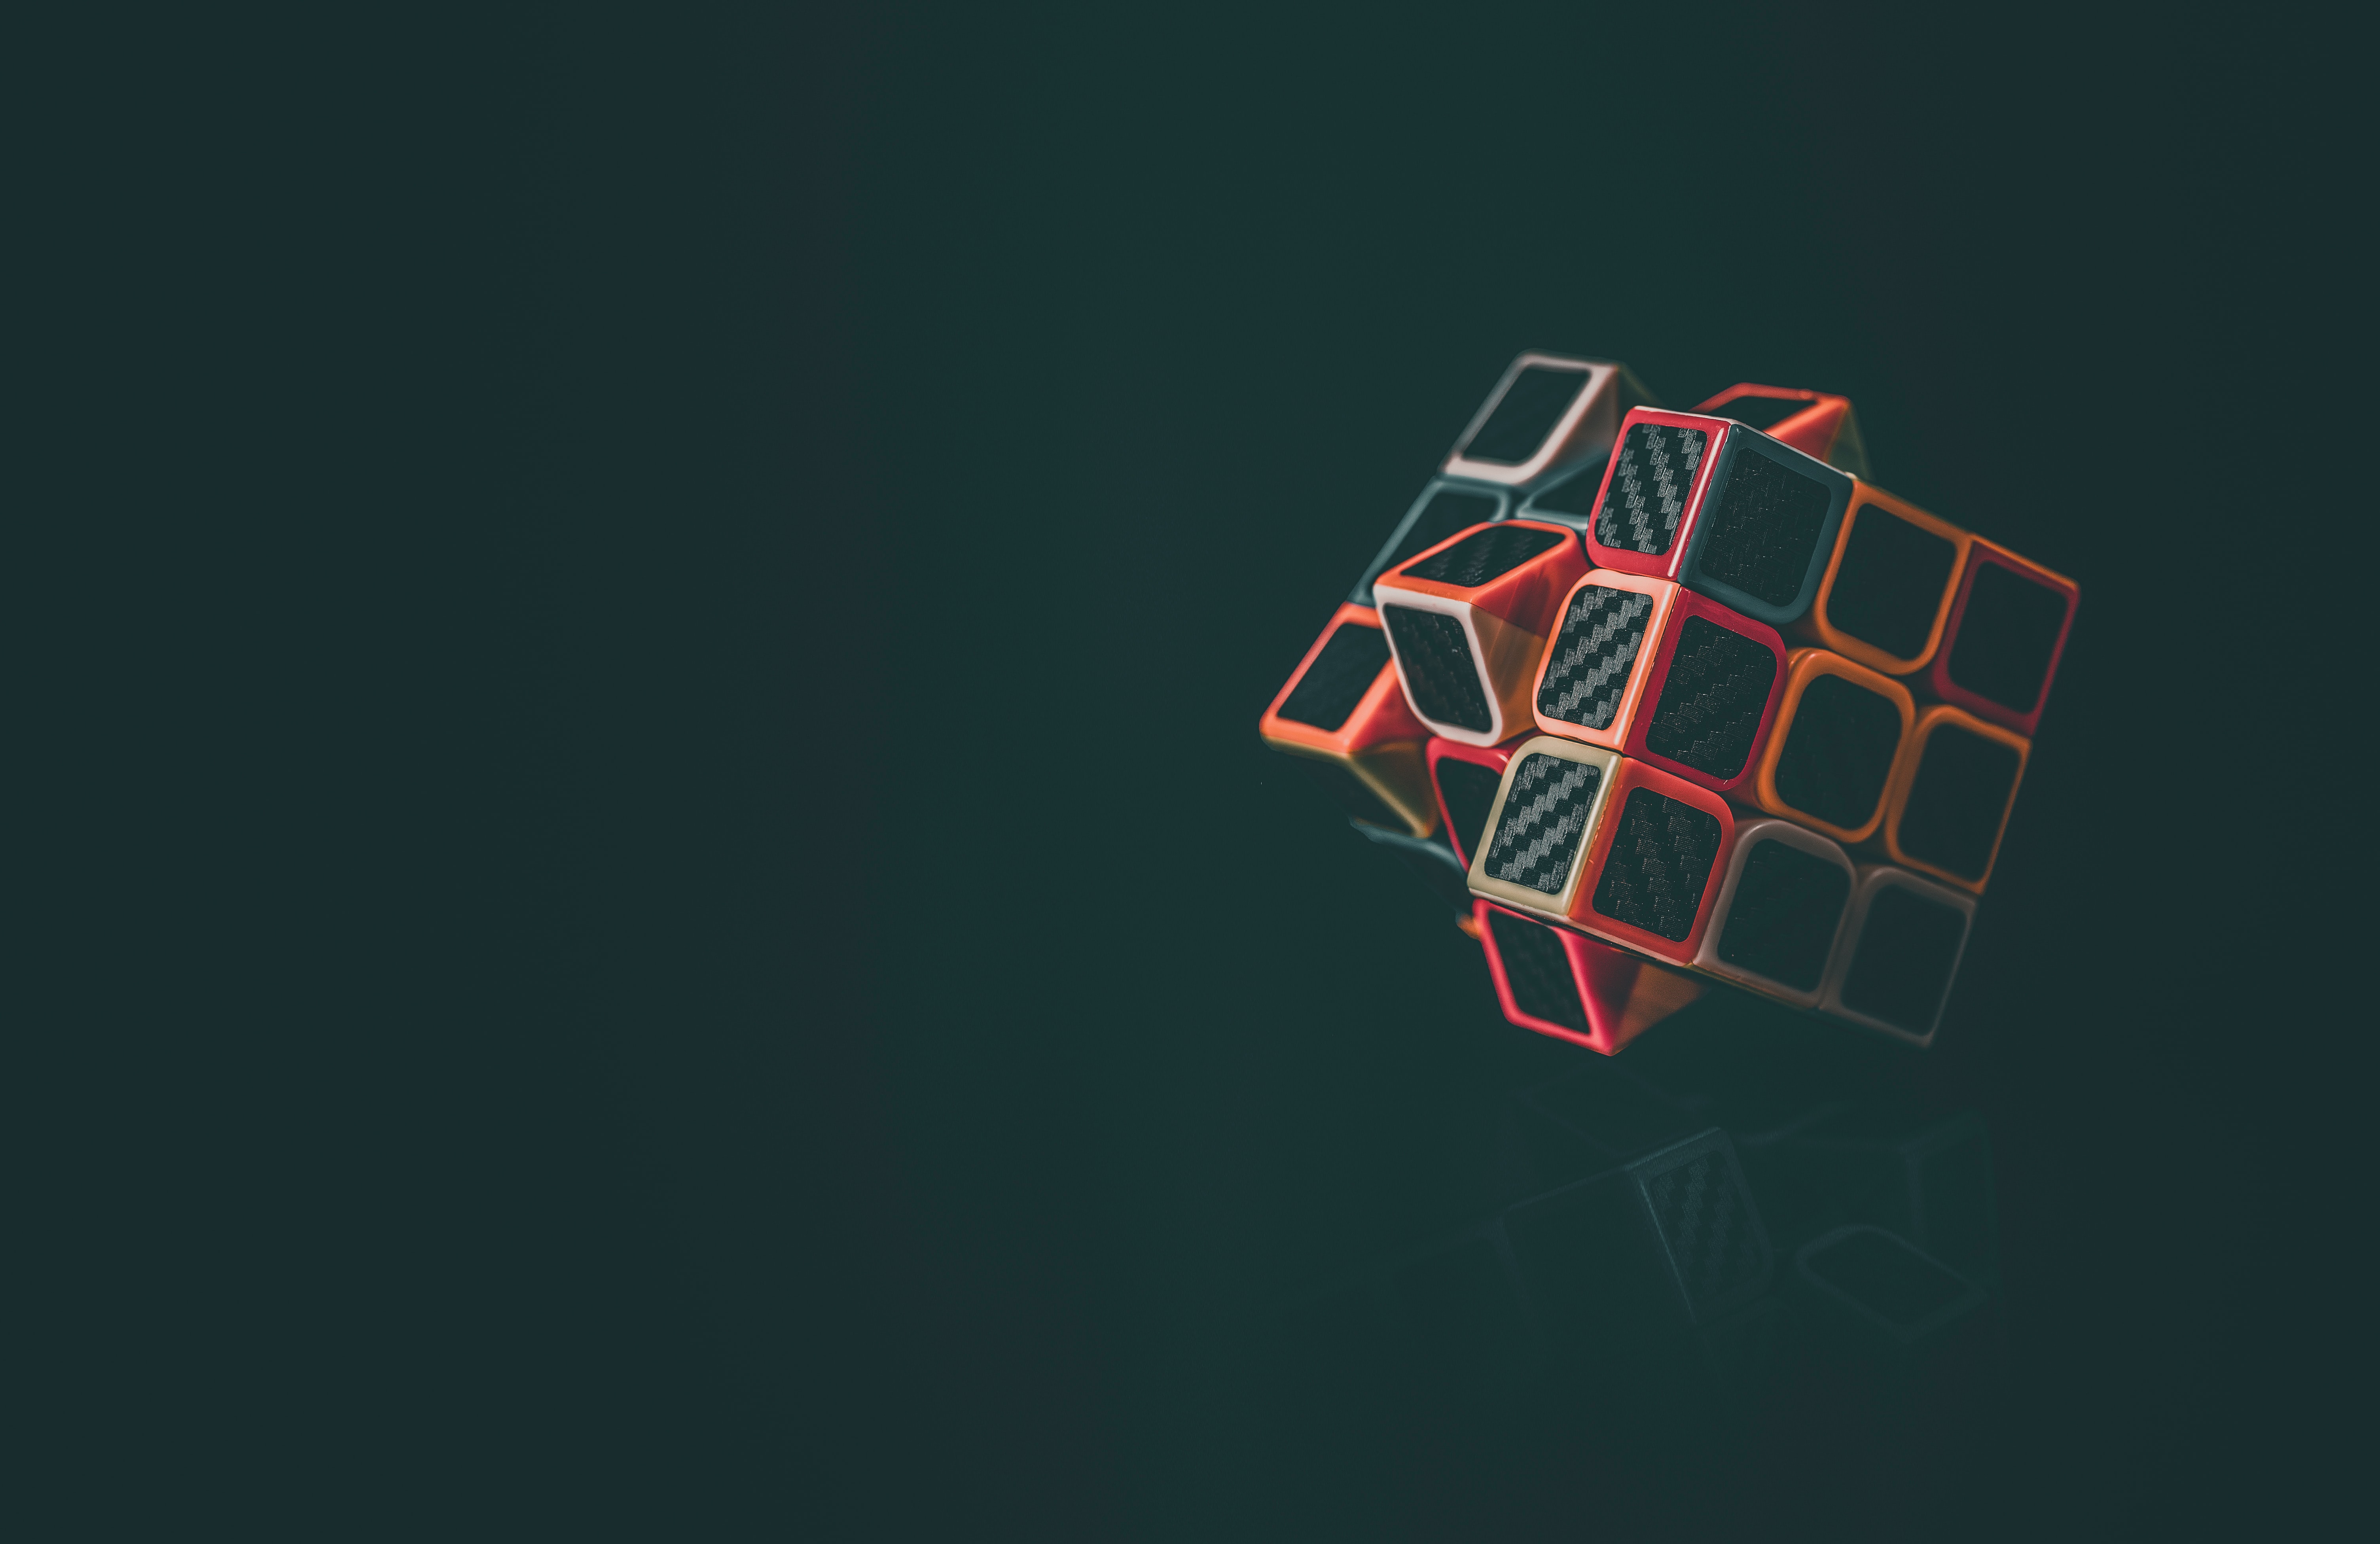 Rubik's cube